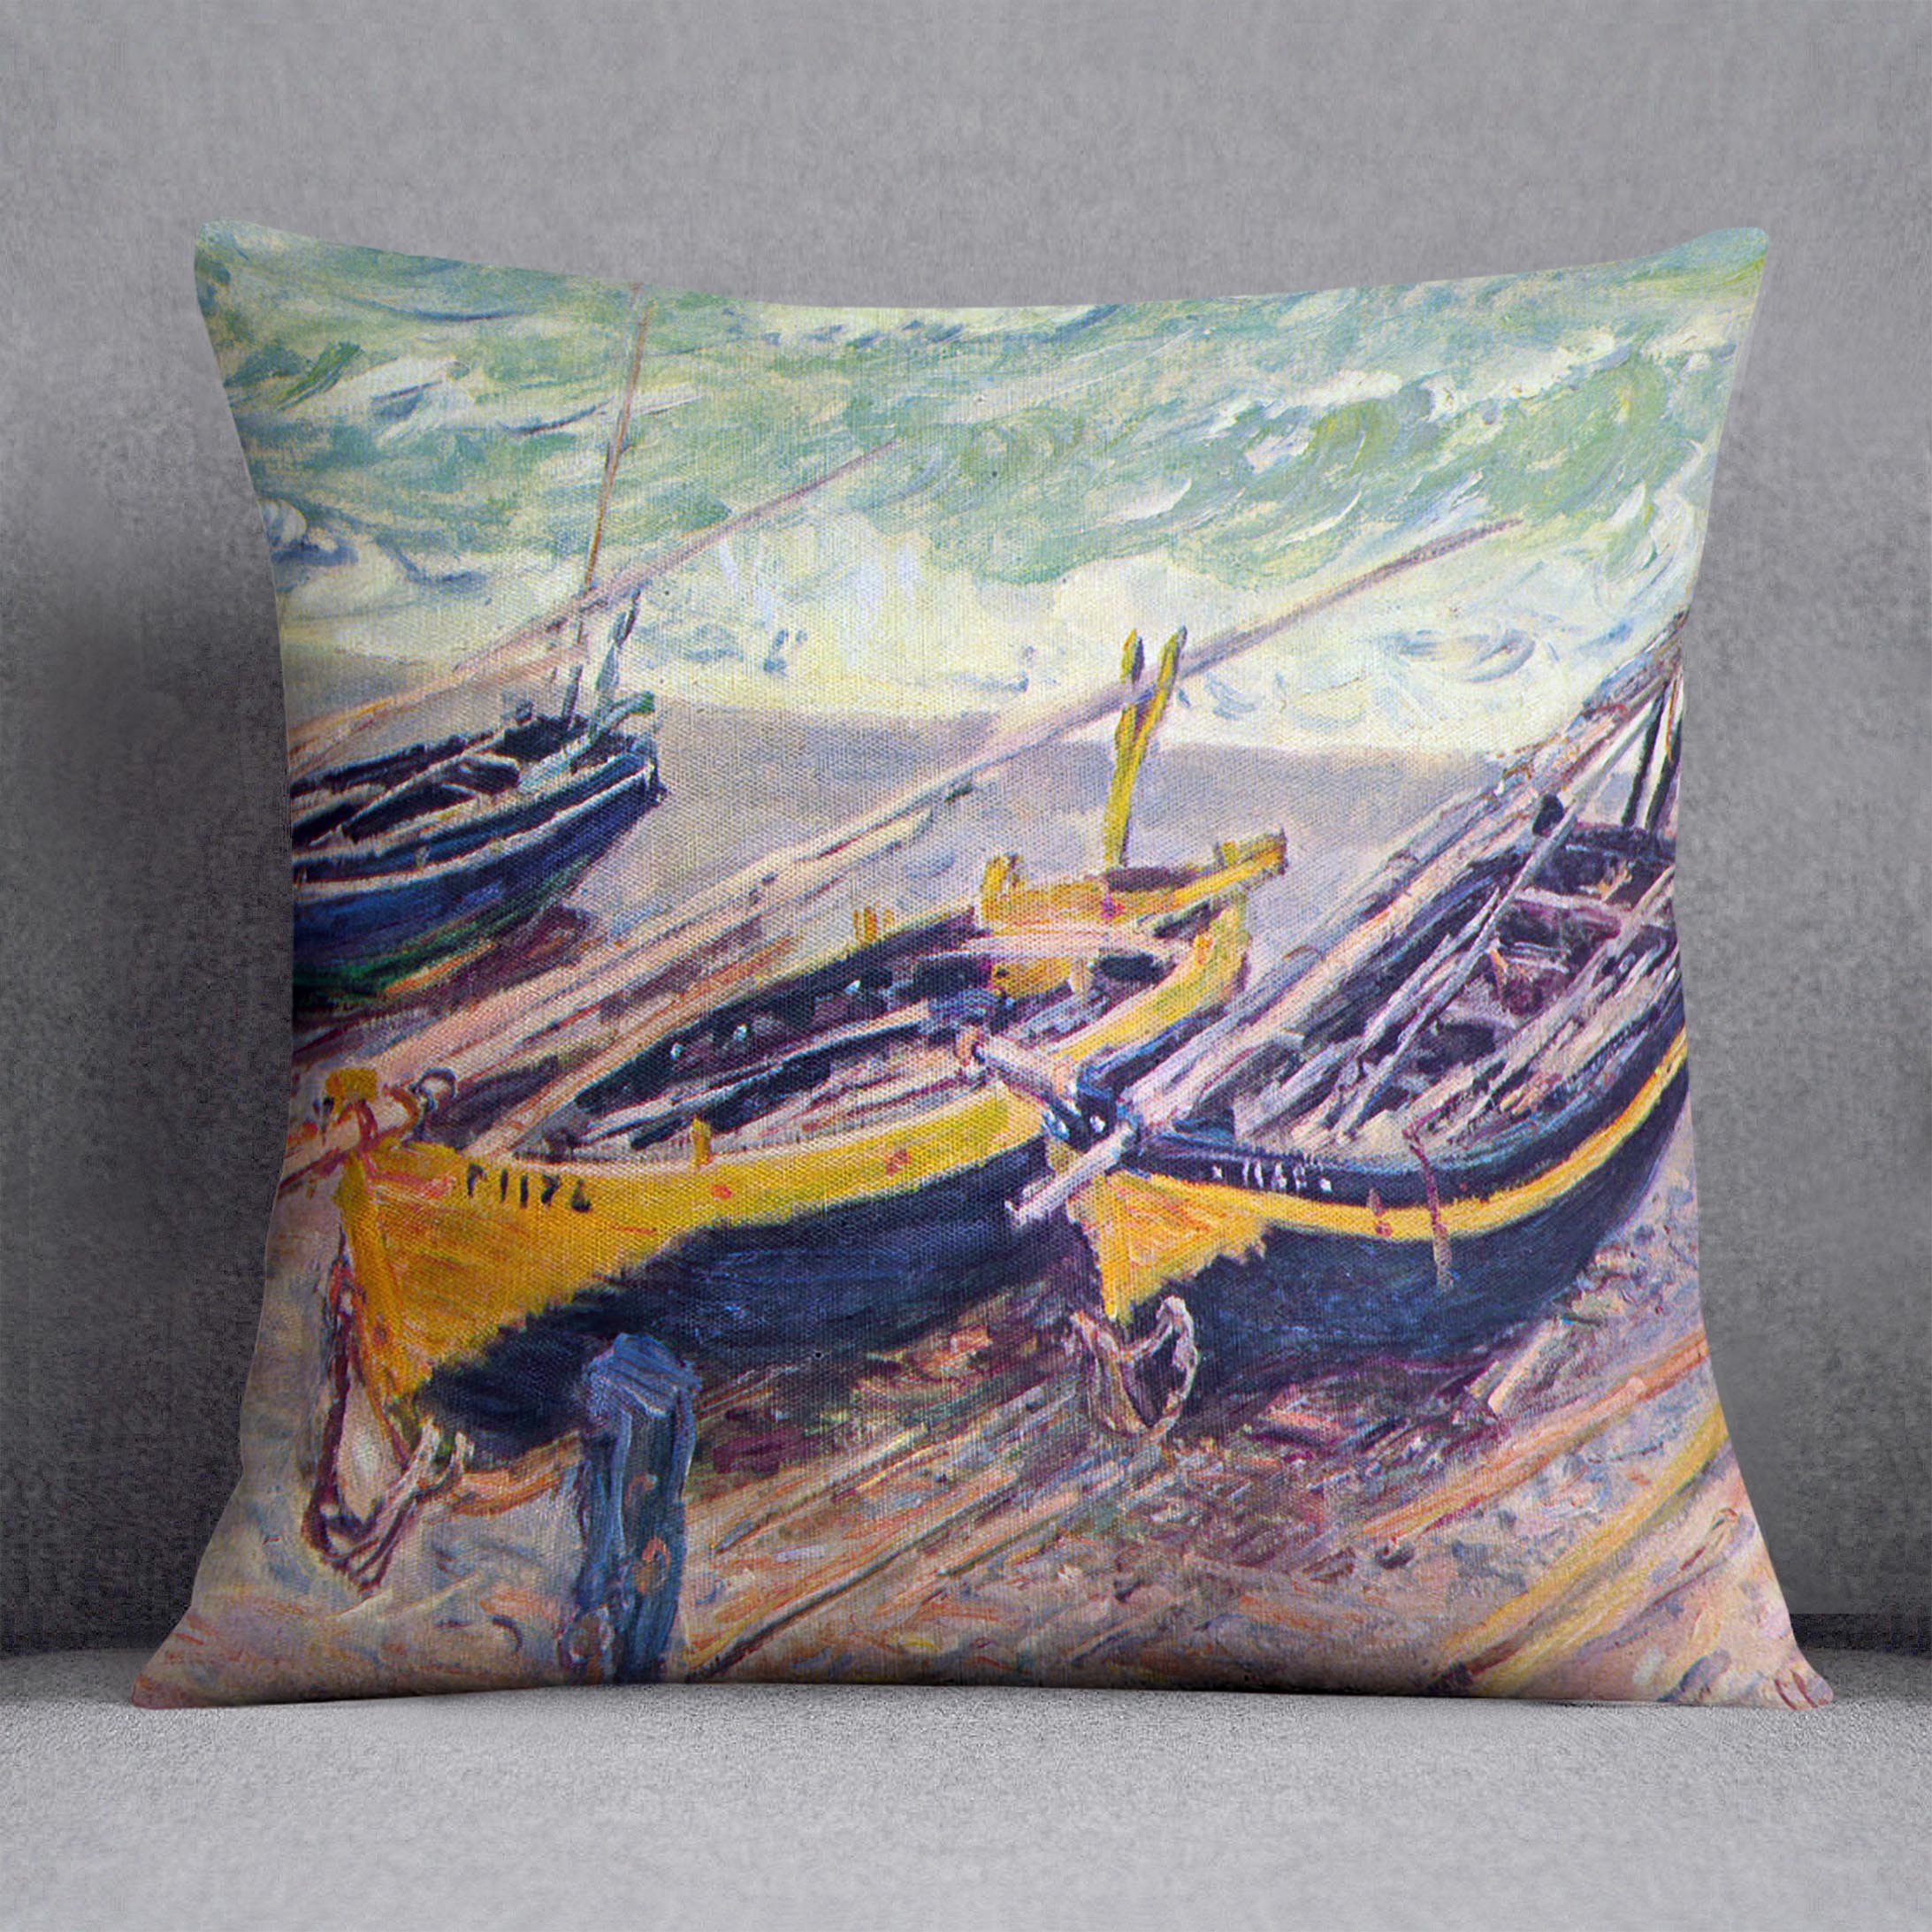 Dock of etretat three fishing boats by Monet Cushion